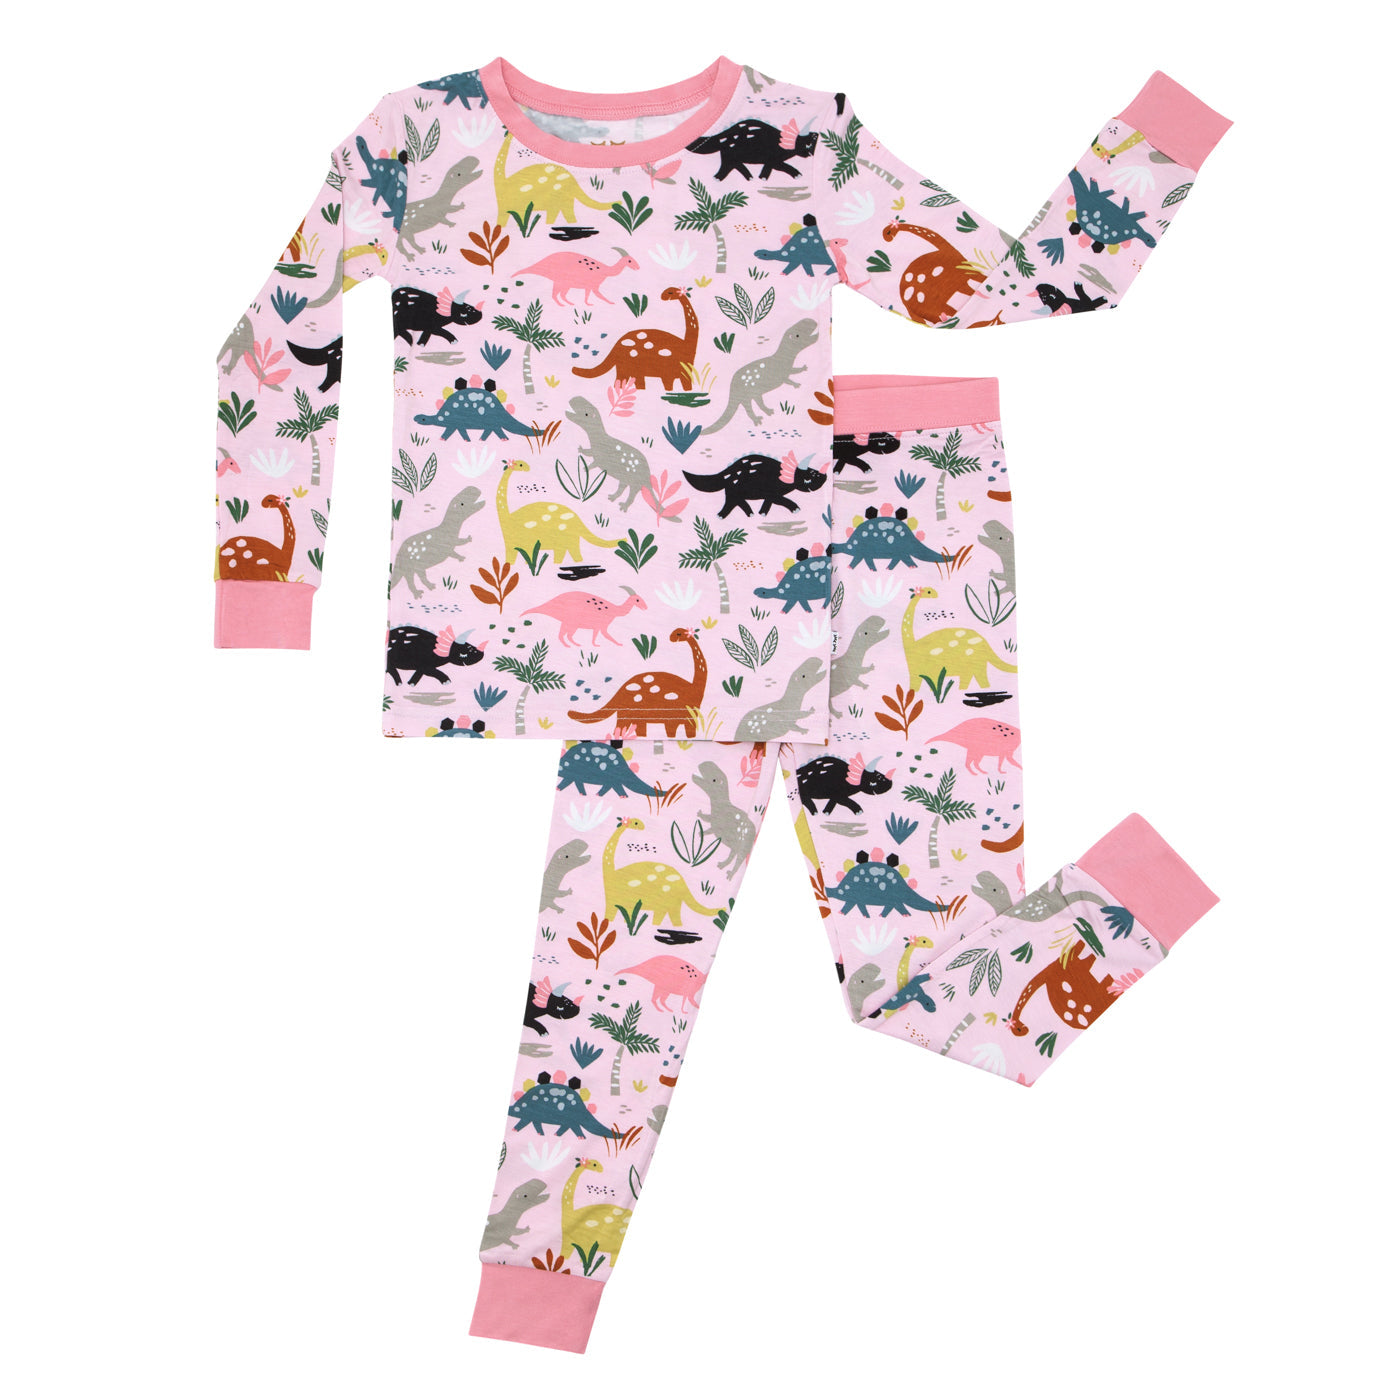 Little Sleepies Monsters, Inc. Two-Piece Pajama Set 4T